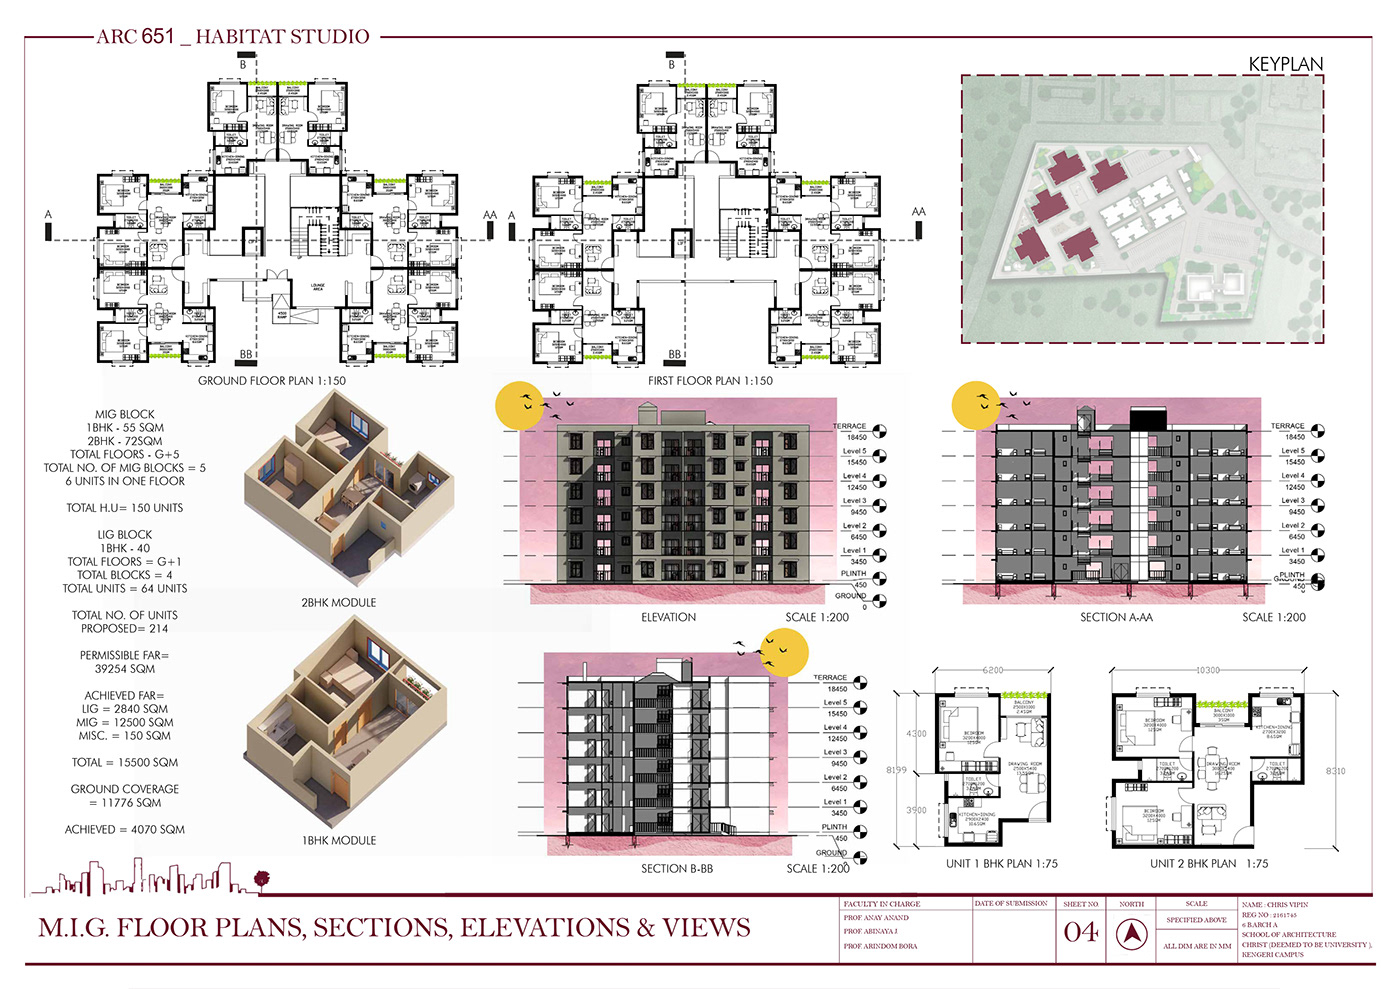 architectural design architecture Render 3D visualization concept housing residential Project Housing Development